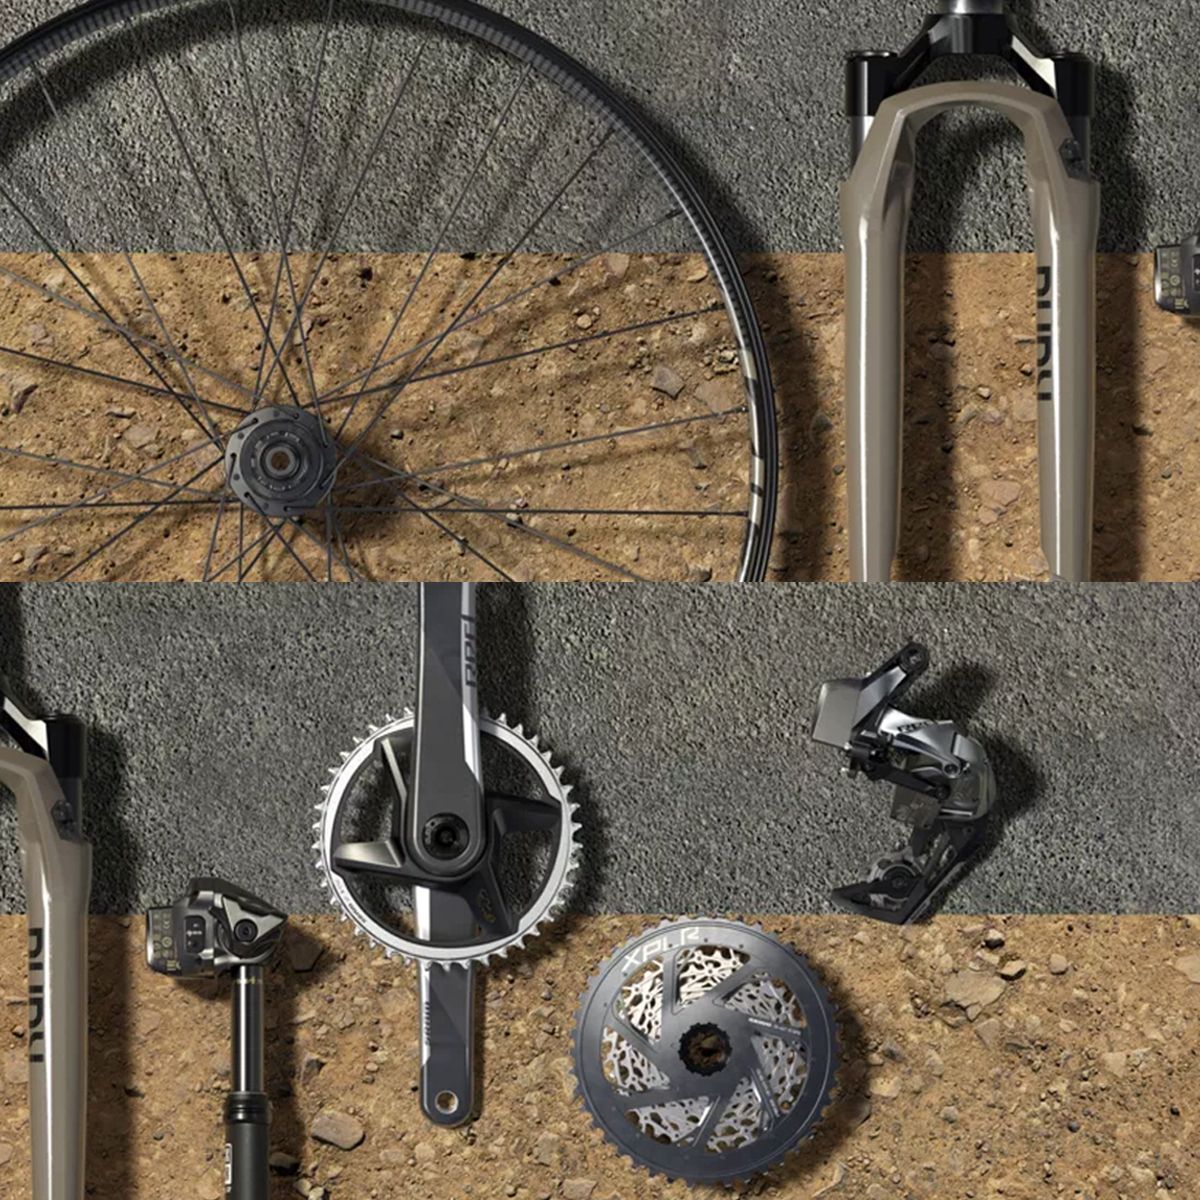 Bike components